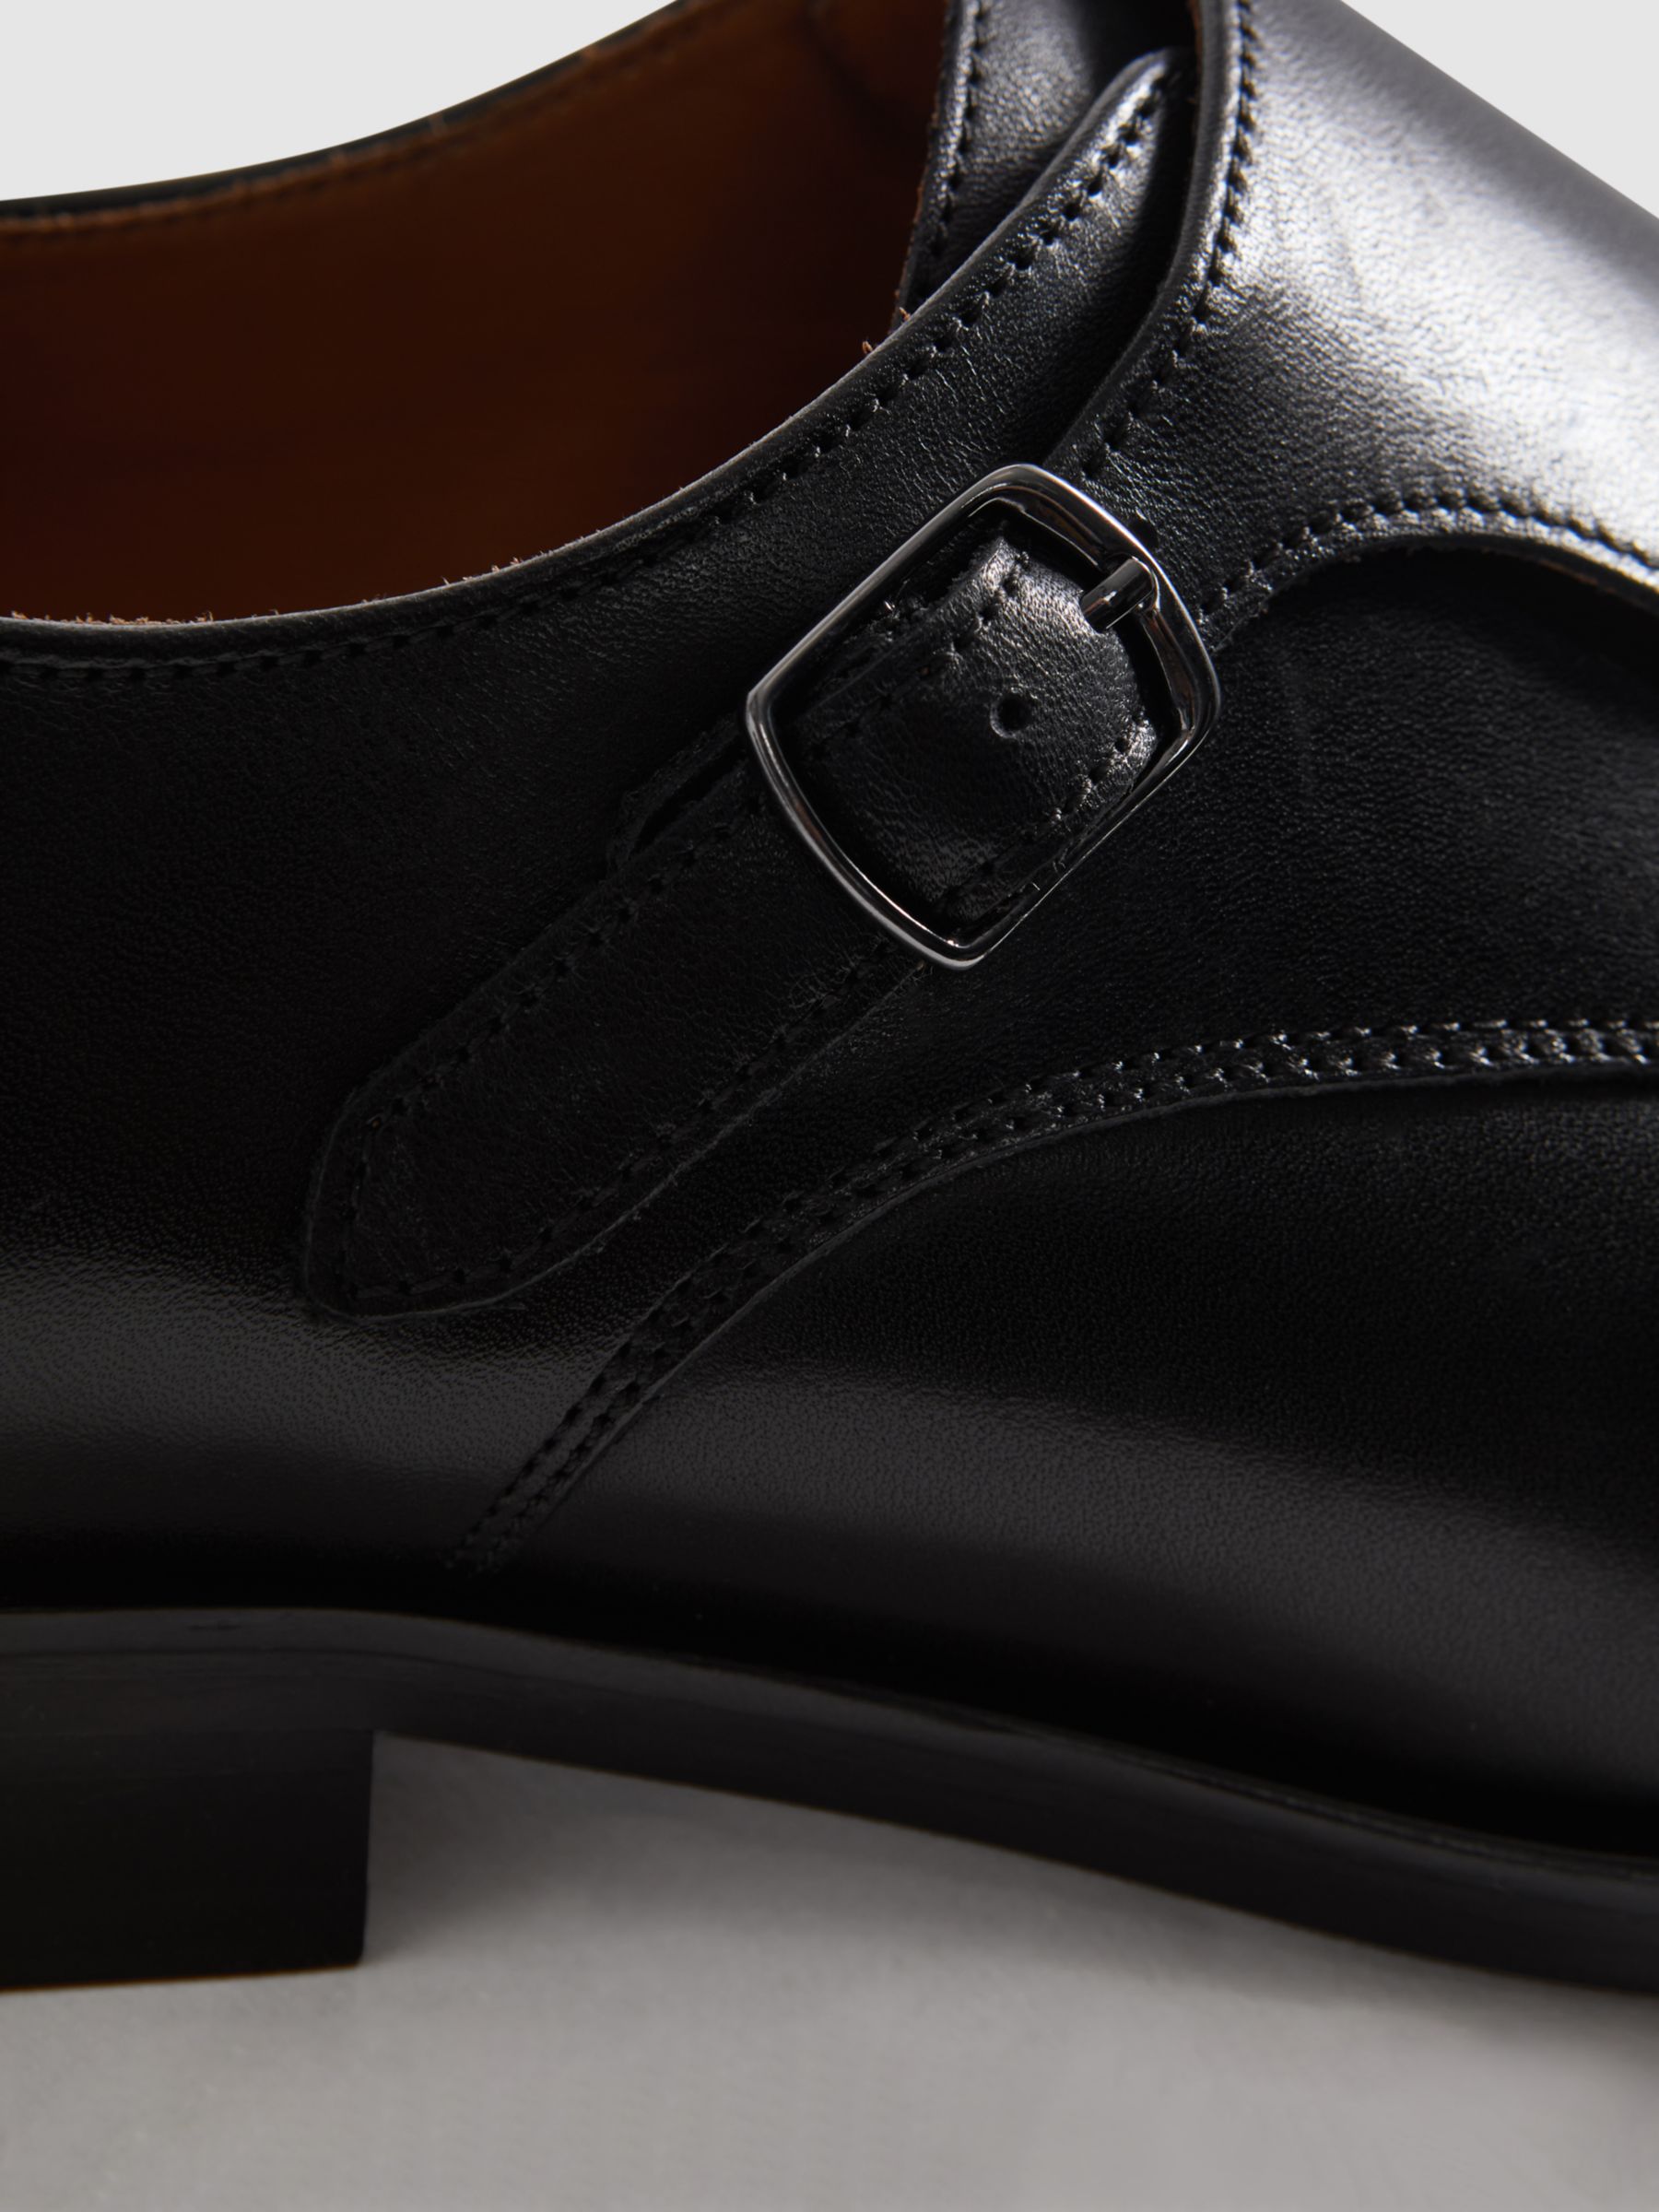 Reiss Amalfi Monk Shoes, Black, 11